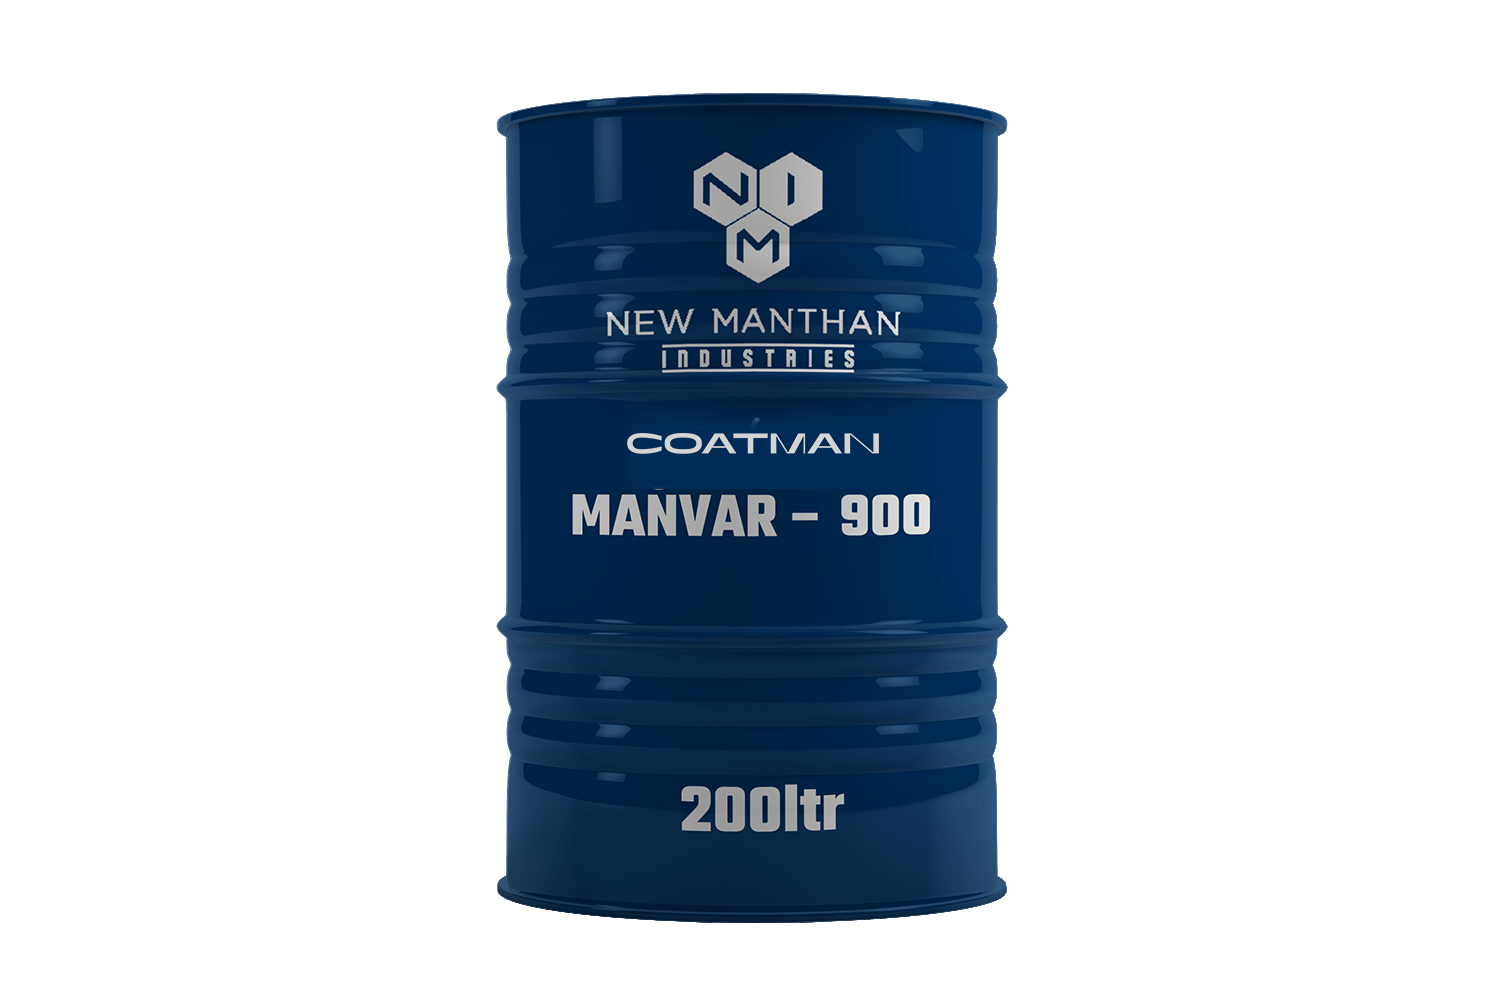 MANVAR-900